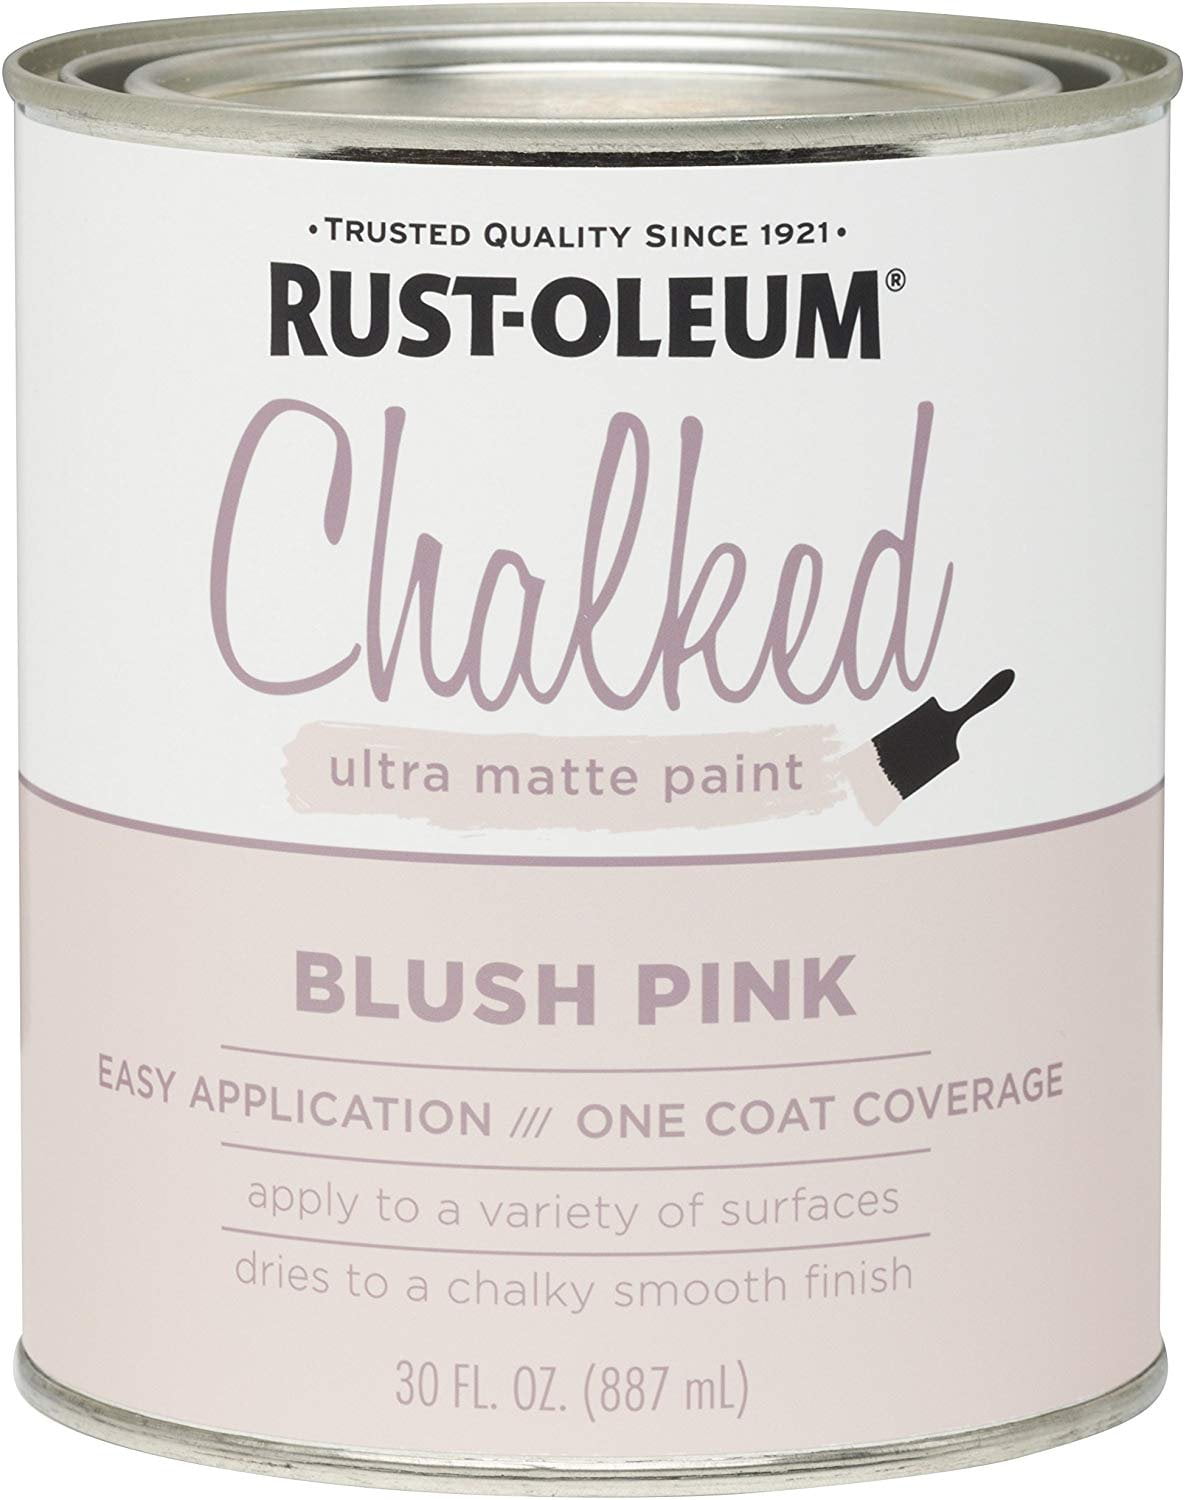 Rust-Oleum 285142 Ultra Matte Interior Chalked Paint 30 oz, Blush Pink